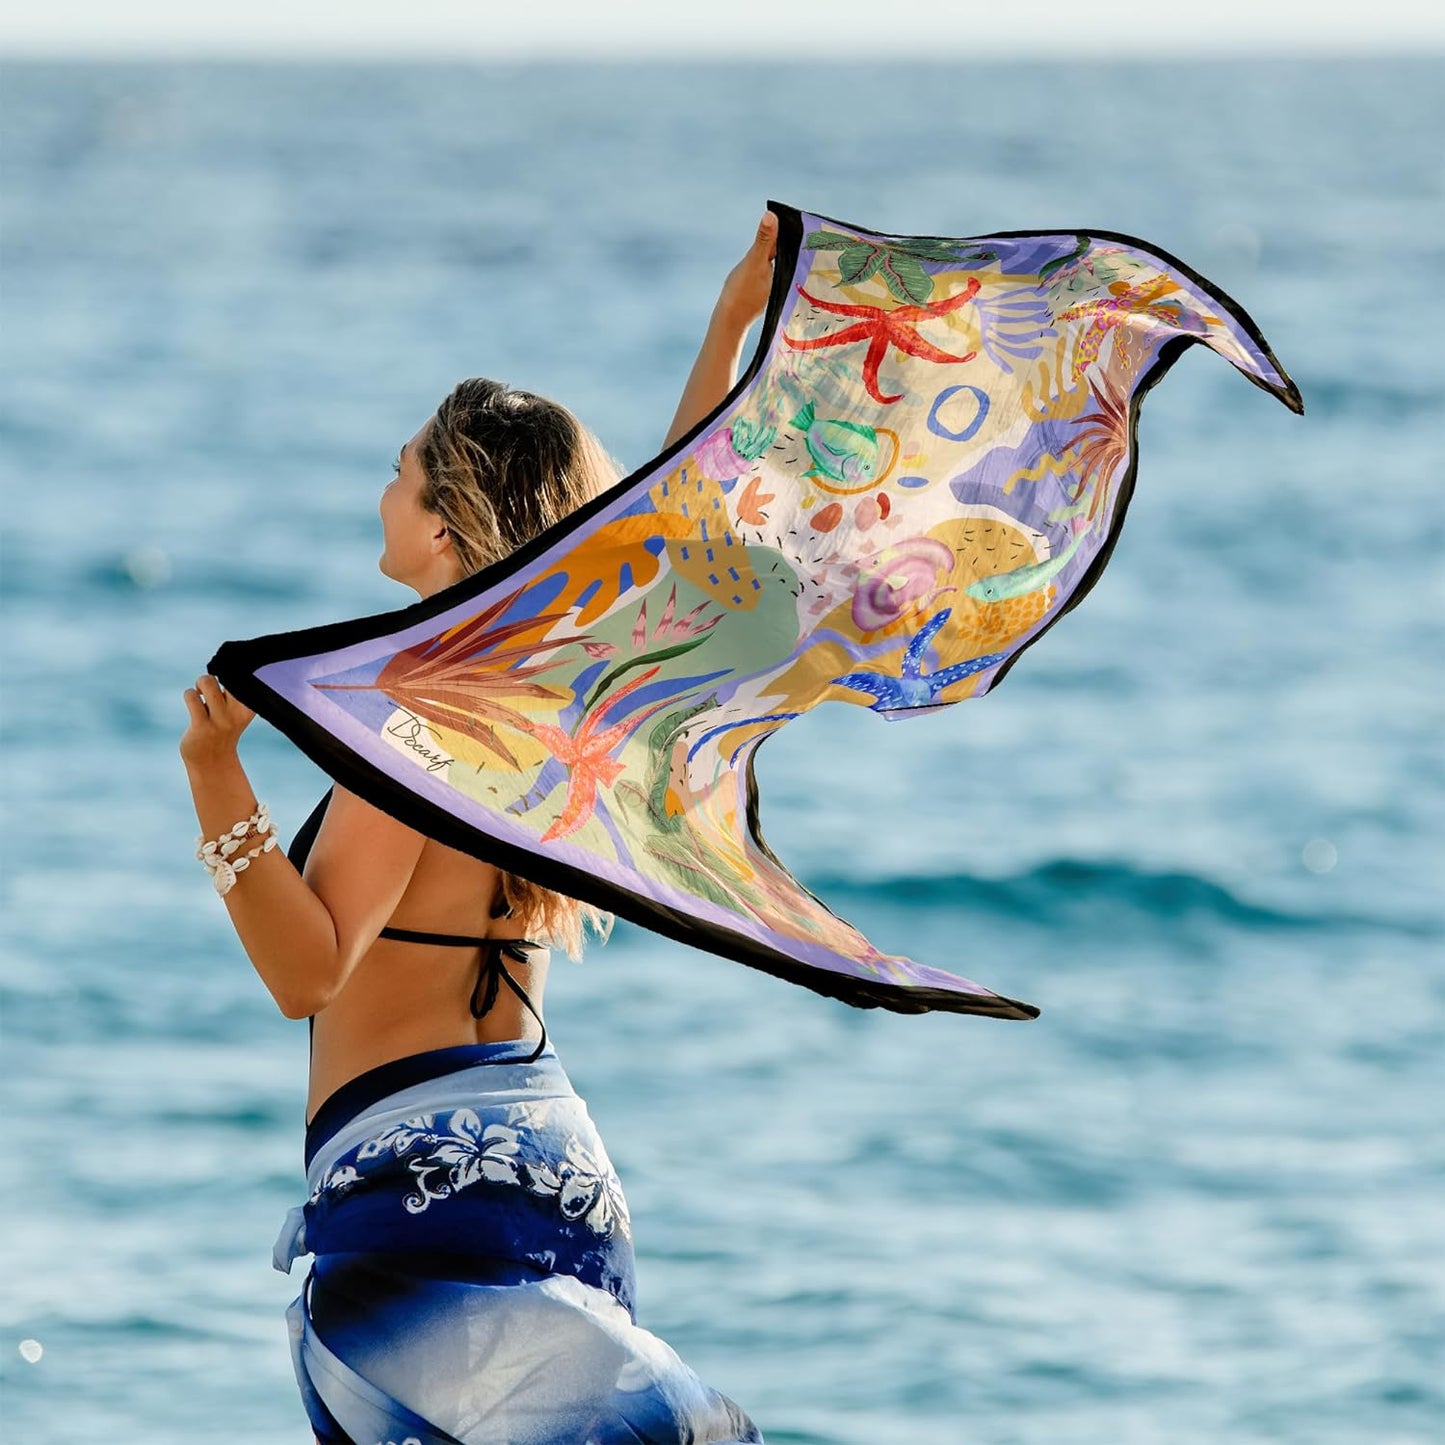 dscarf Women Sarong Swimsuit Printed Cover up Chiffon Long Bikini Wraps | Pareo Swimwear Beach Bathing Suit Cover Up Beach Design 1